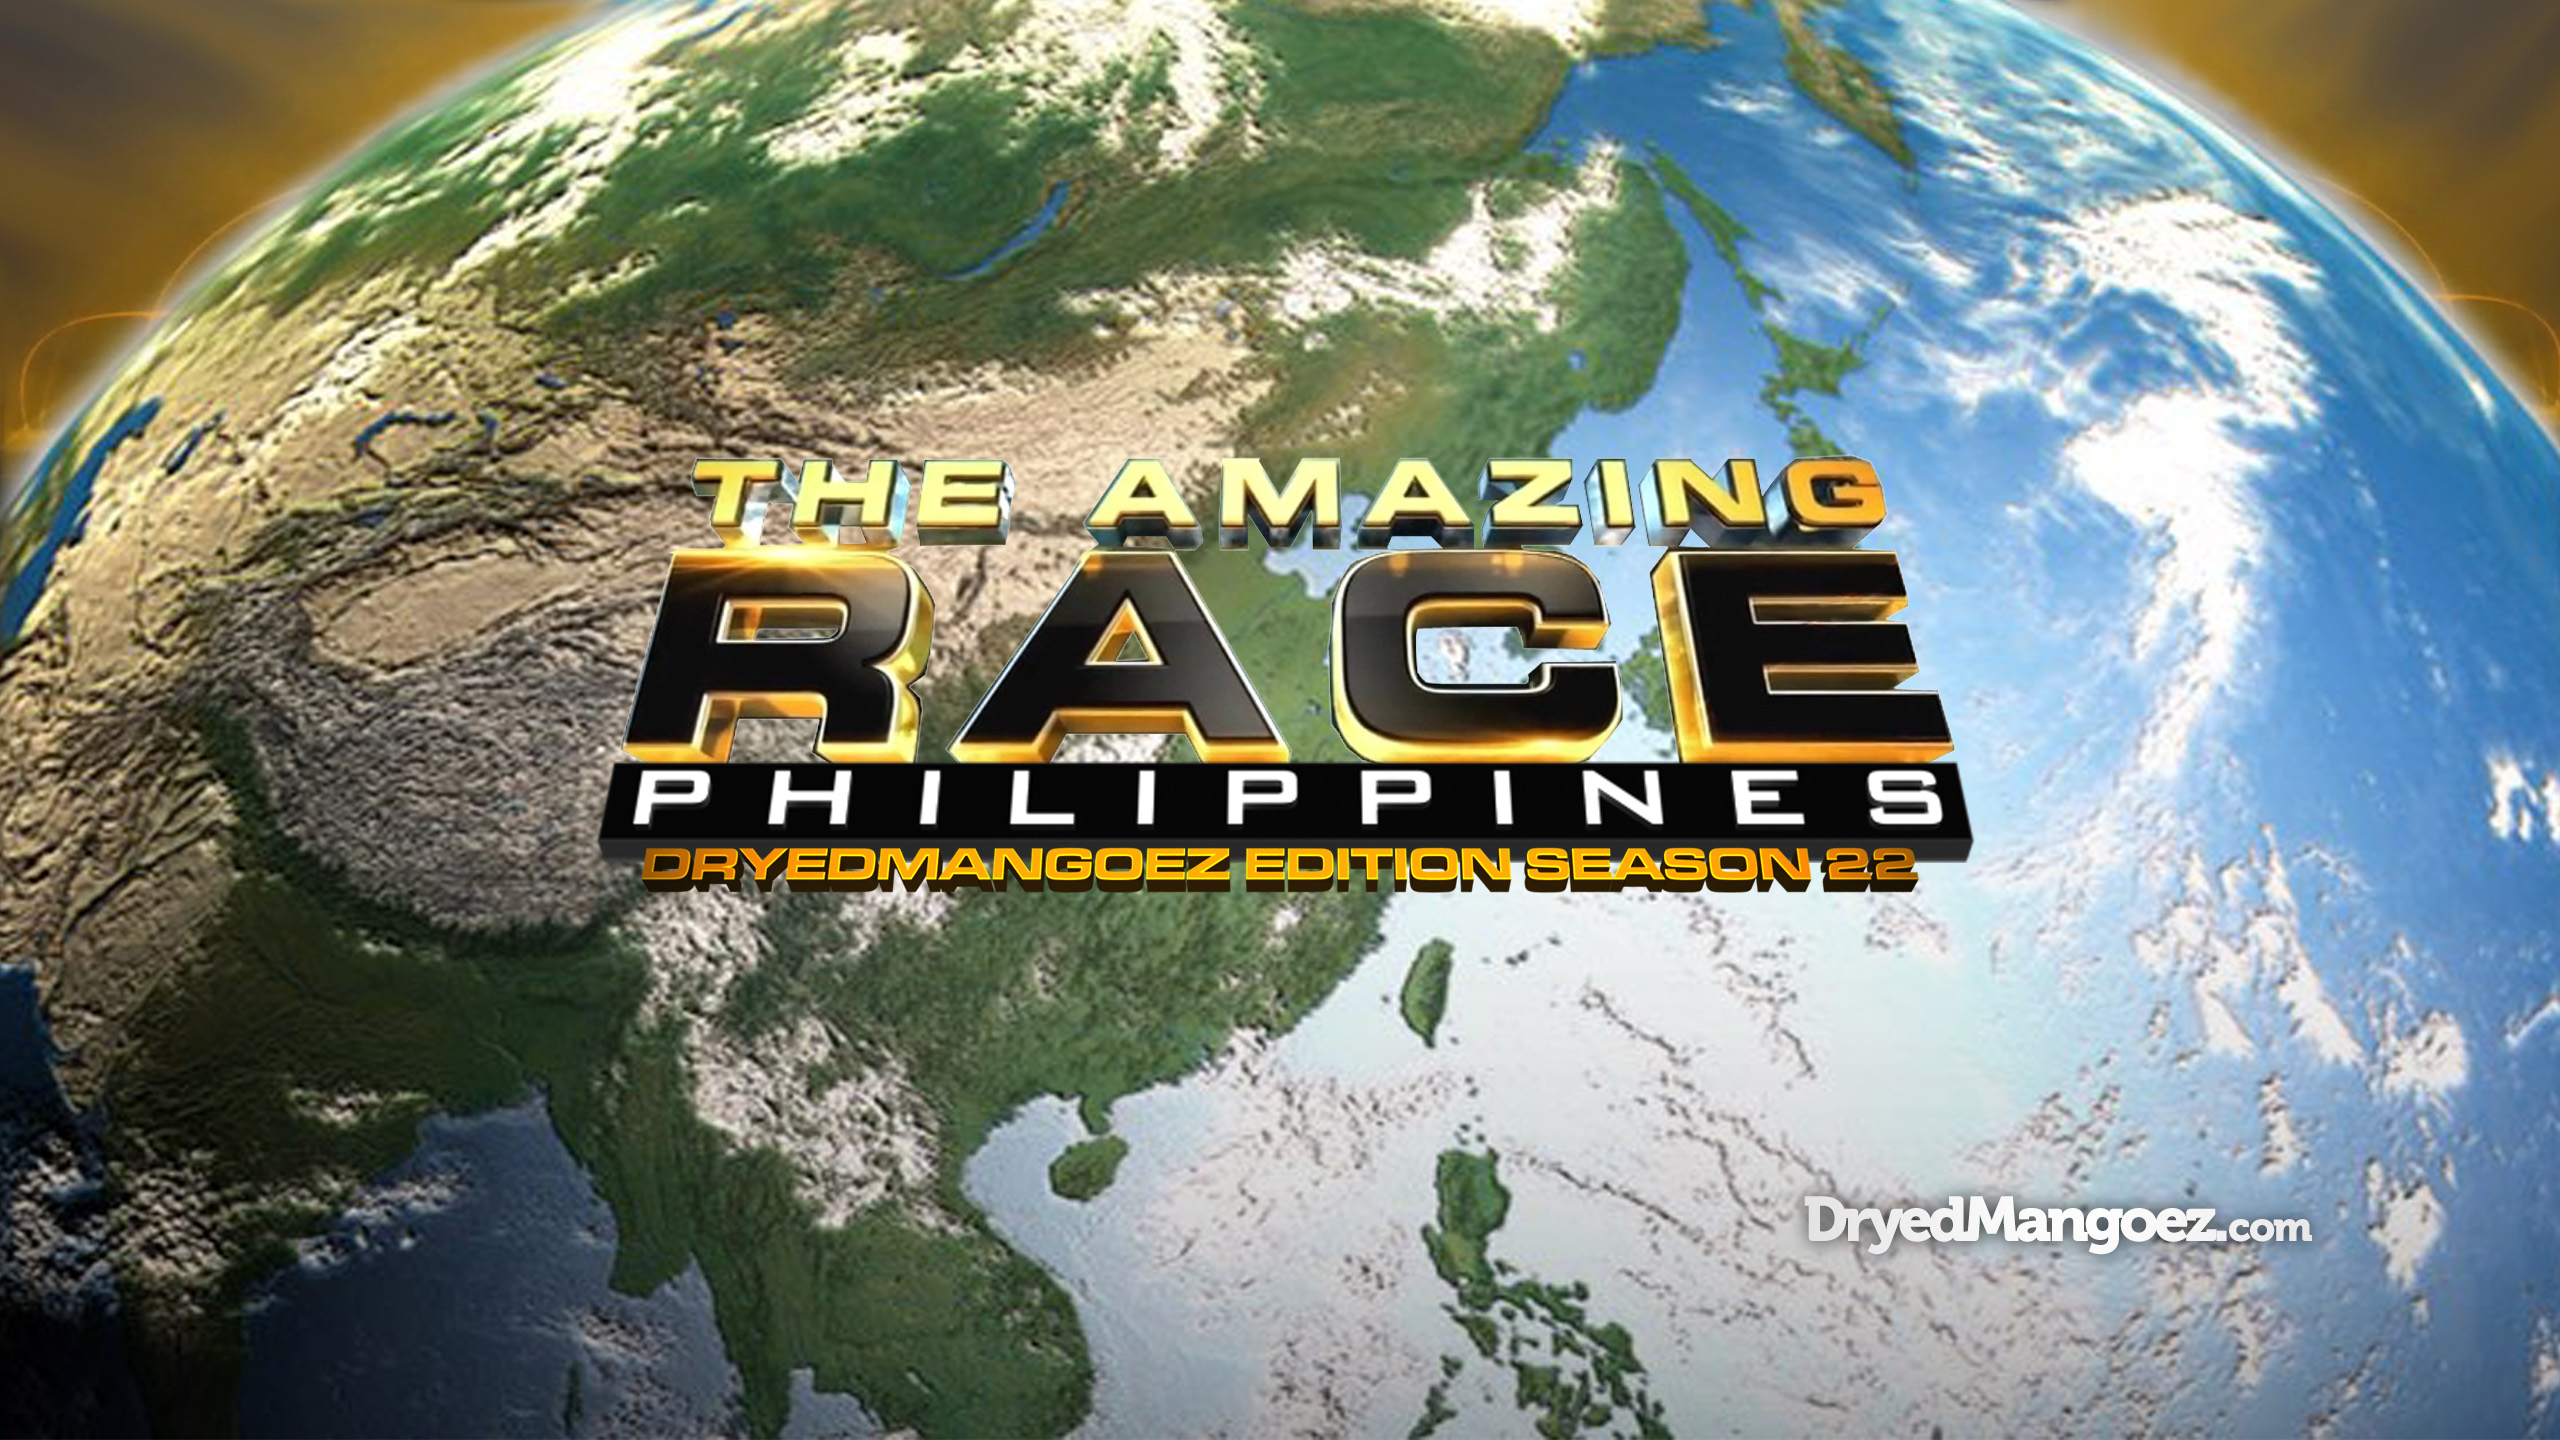 The Amazing Race Philippines: DryedMangoez Edition Season 22